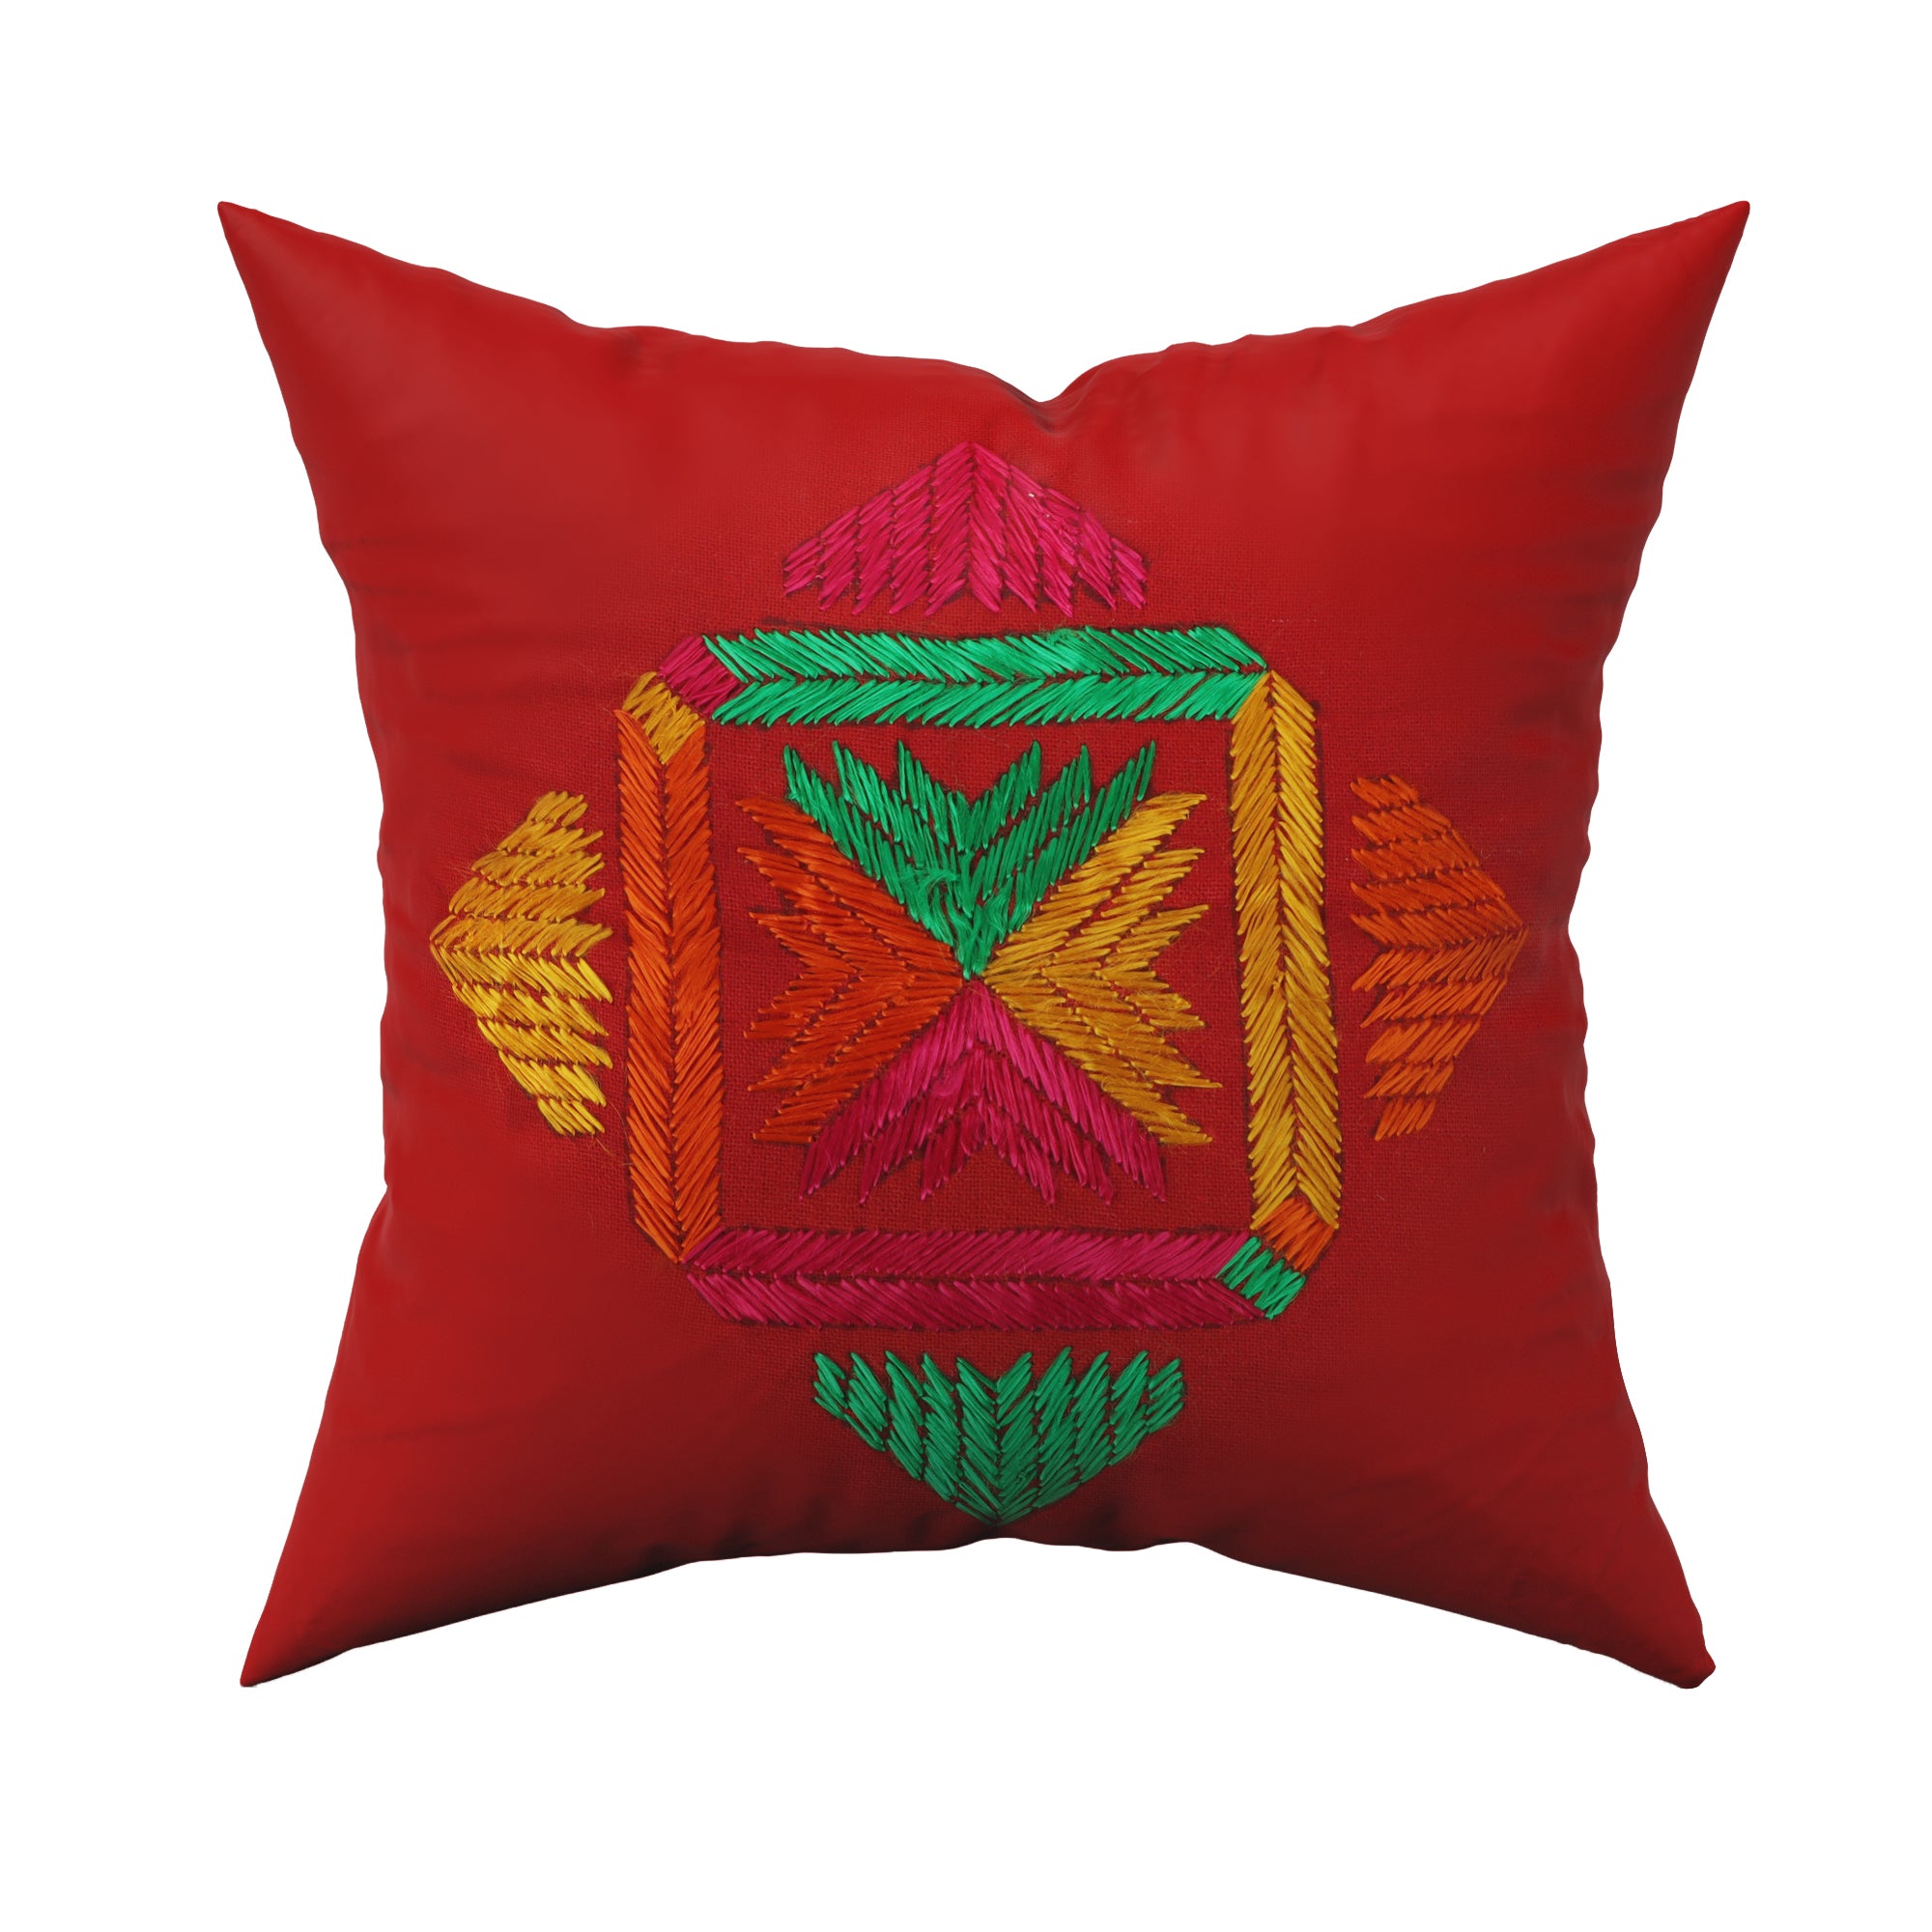 Annuttama Bloom The Room Phulkari Embroidery Cushion Cover (Set Of 2)